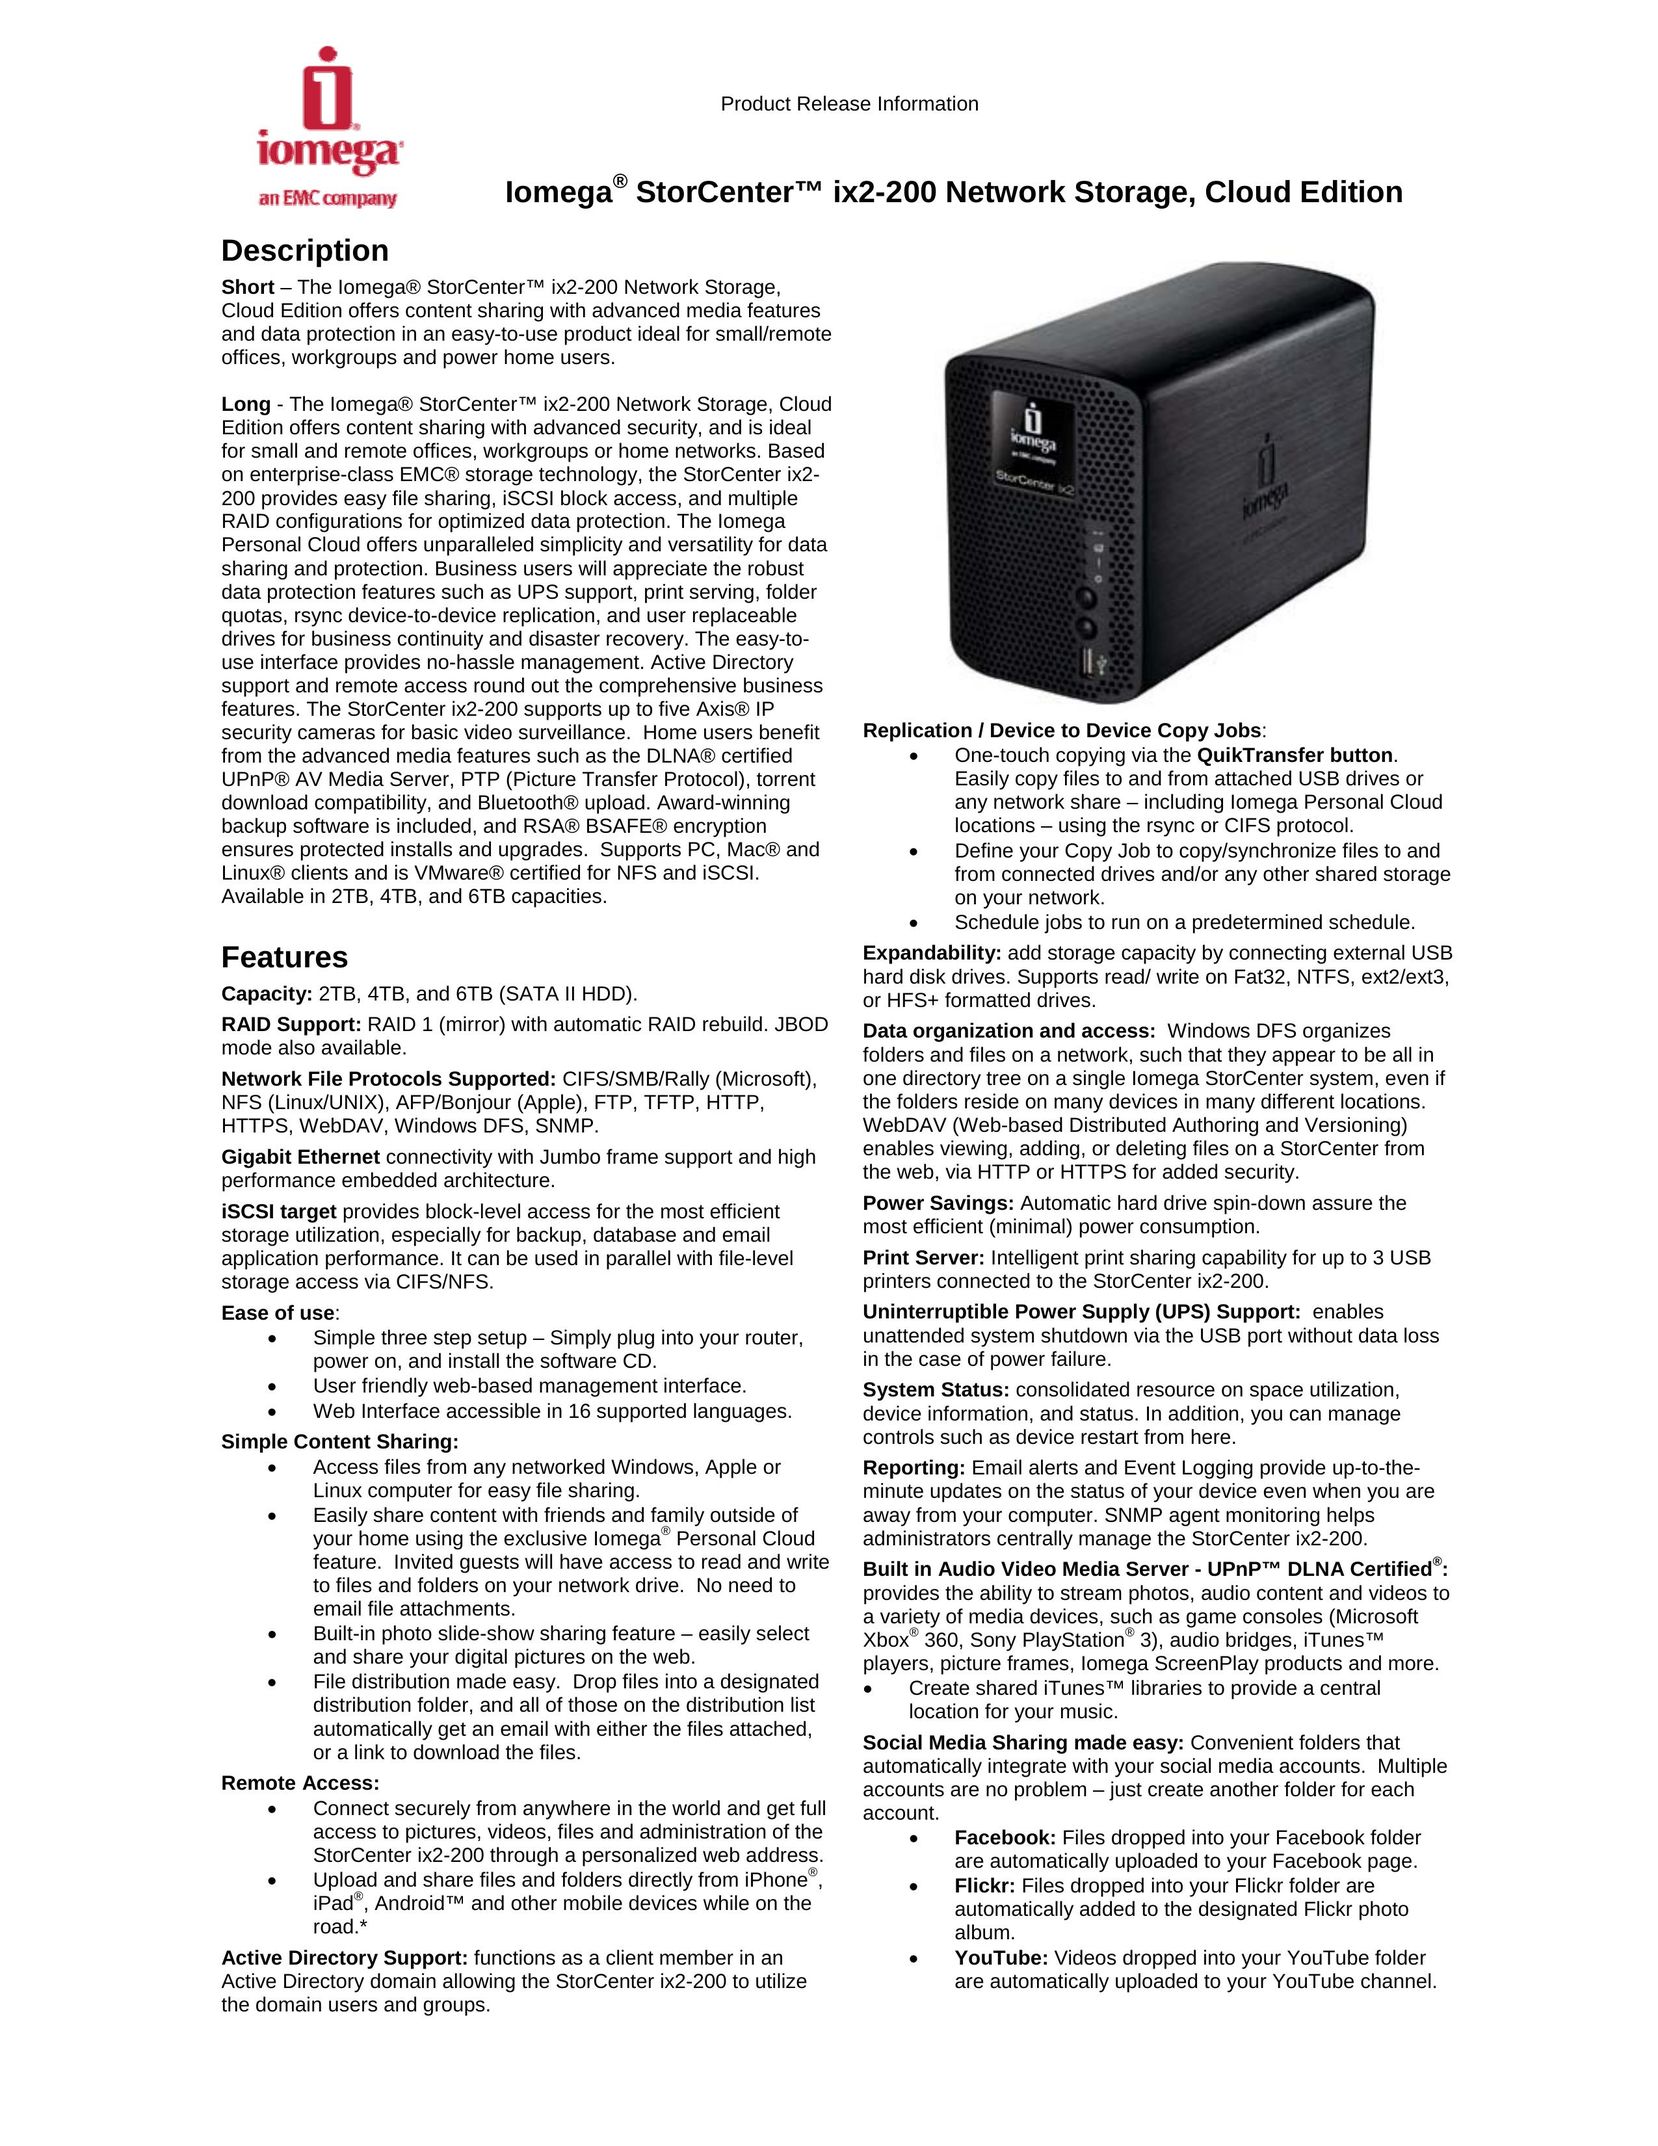 Iomega 34729 Portable Media Storage User Manual